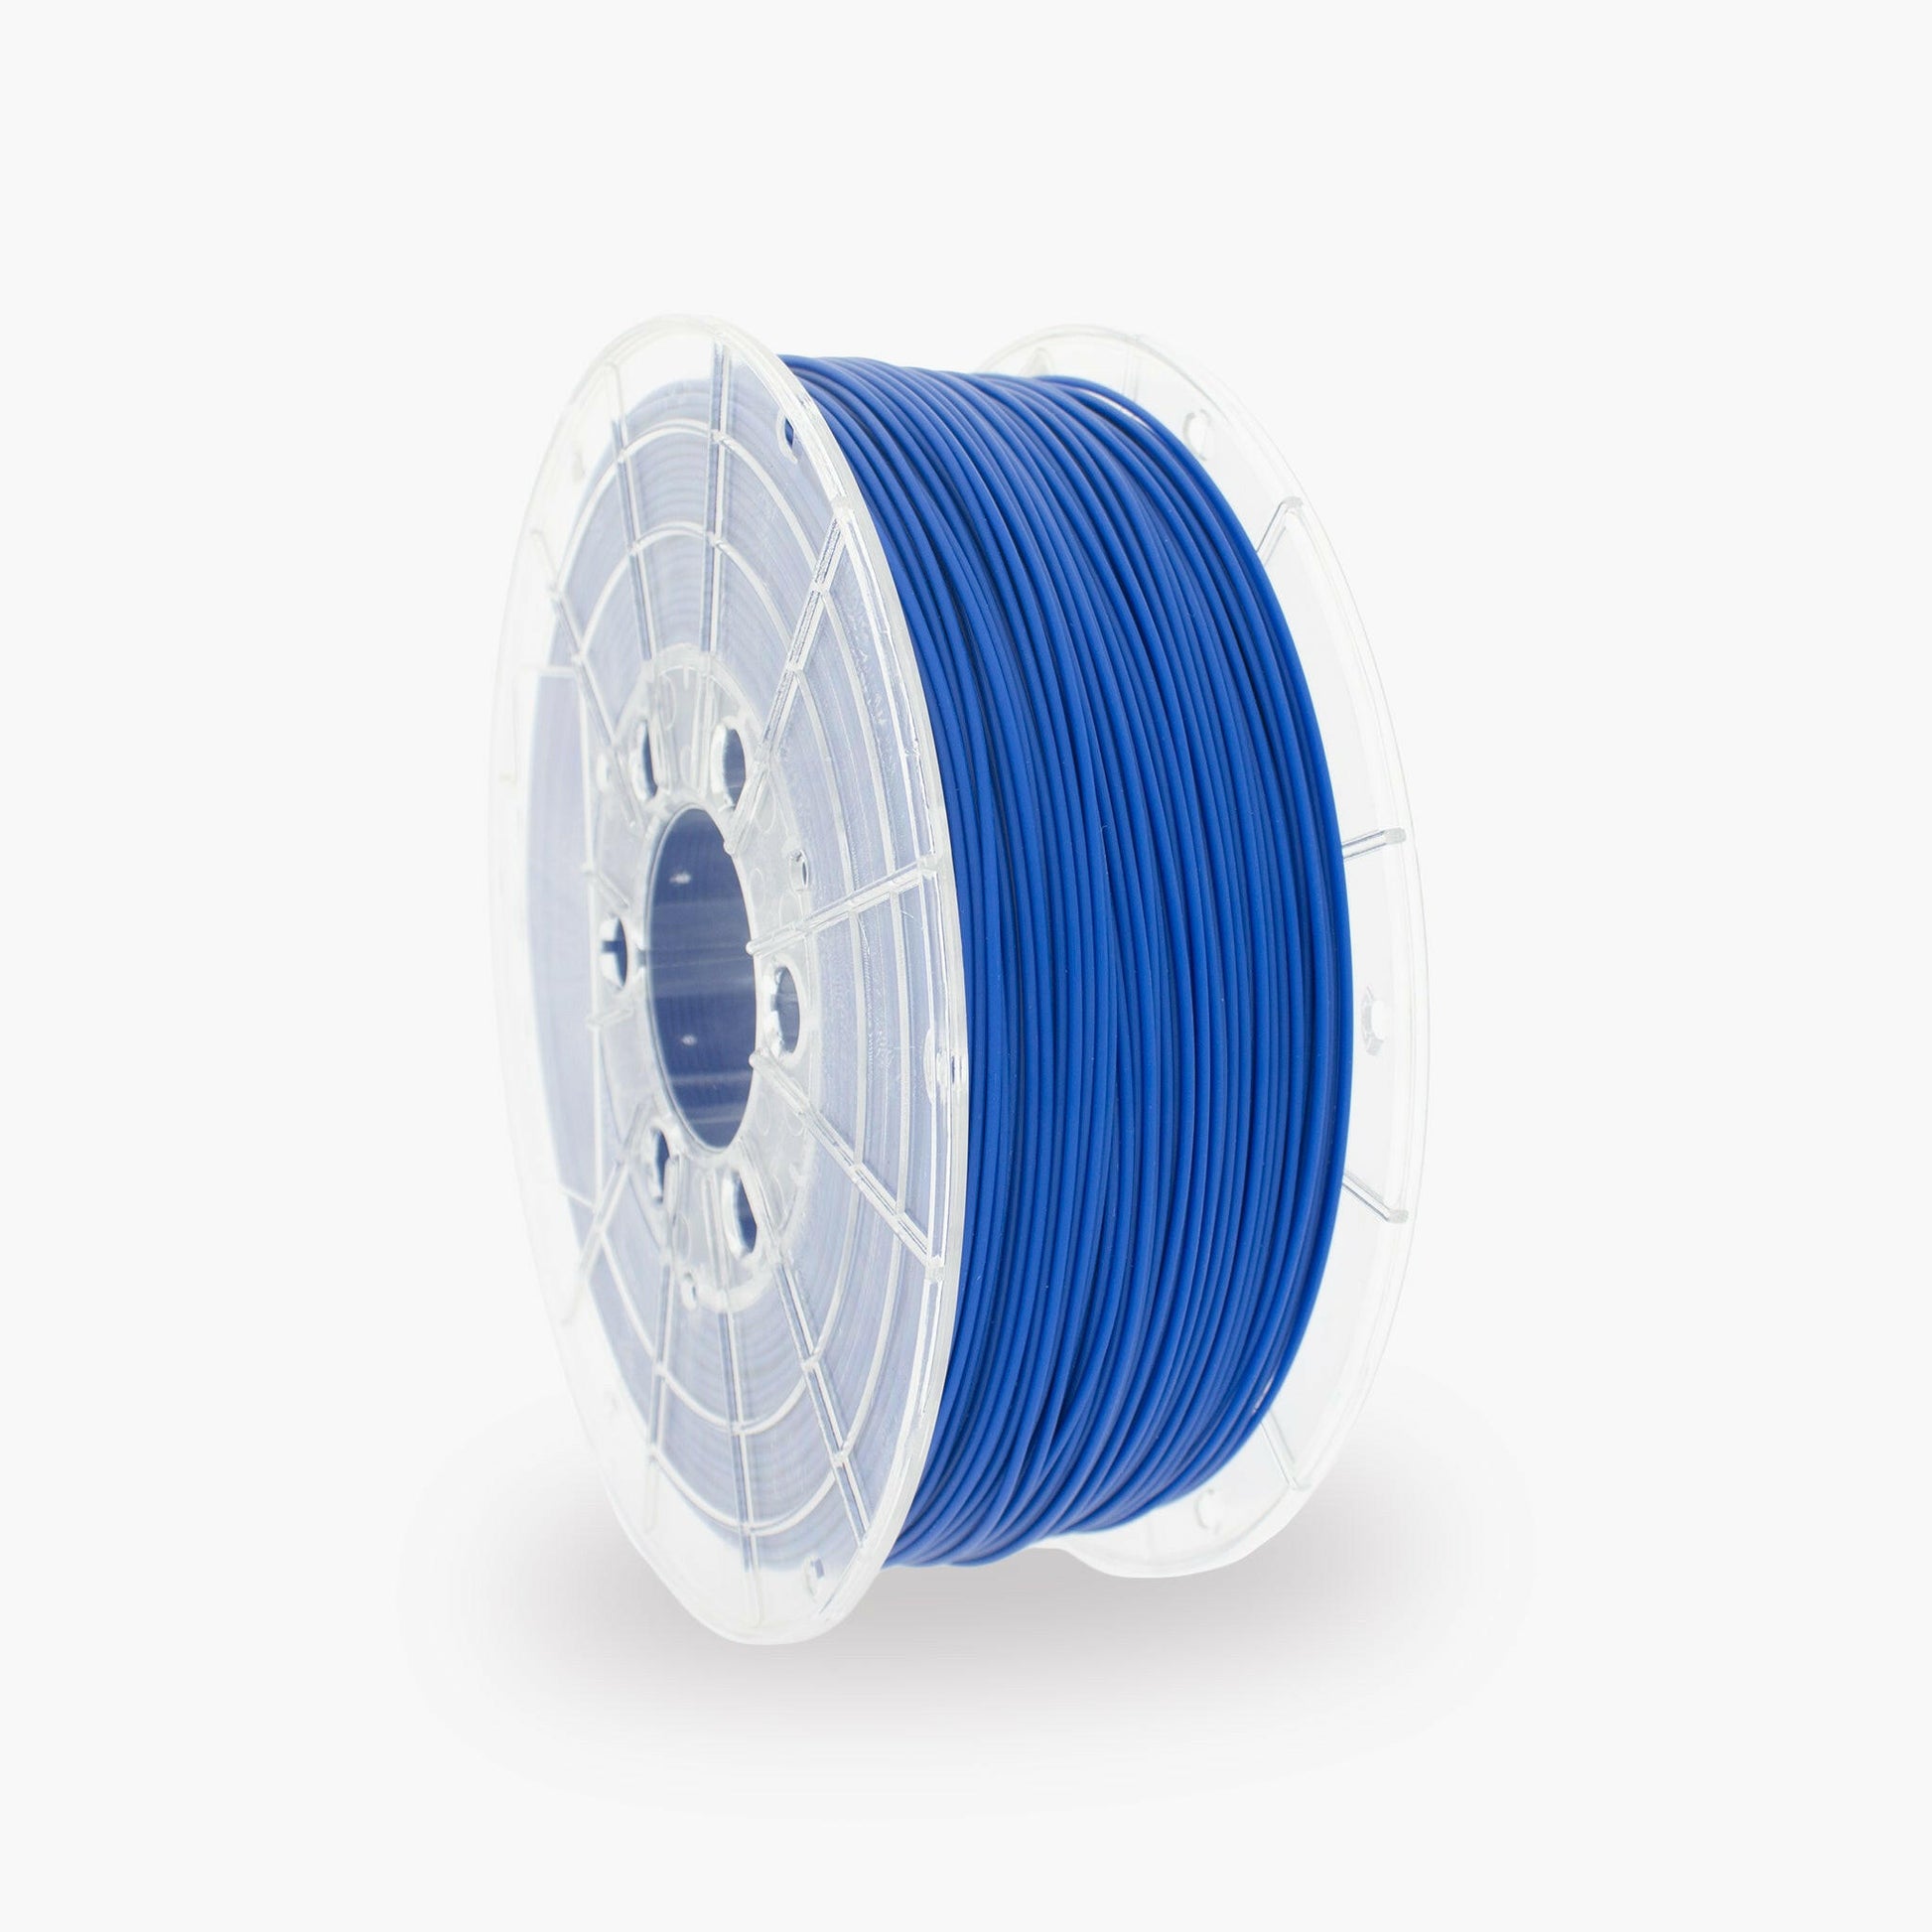 Ultramarine Blue PLA 3D Printer Filament with a diameter of 1.75mm on a 1KG Spool.